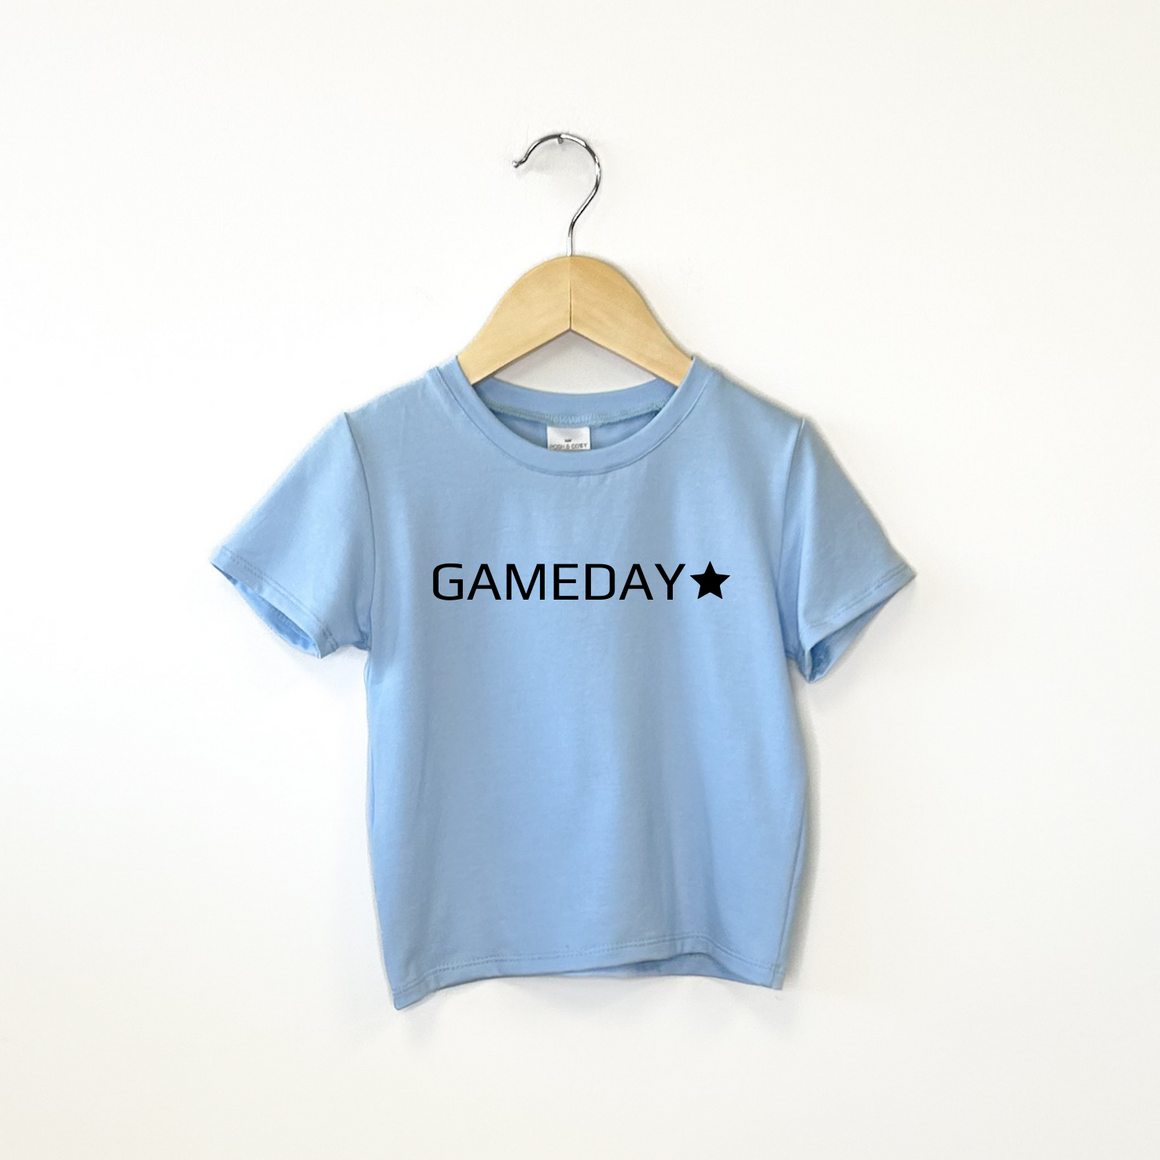 Gameday Tee Shirt - Posh & Cozy